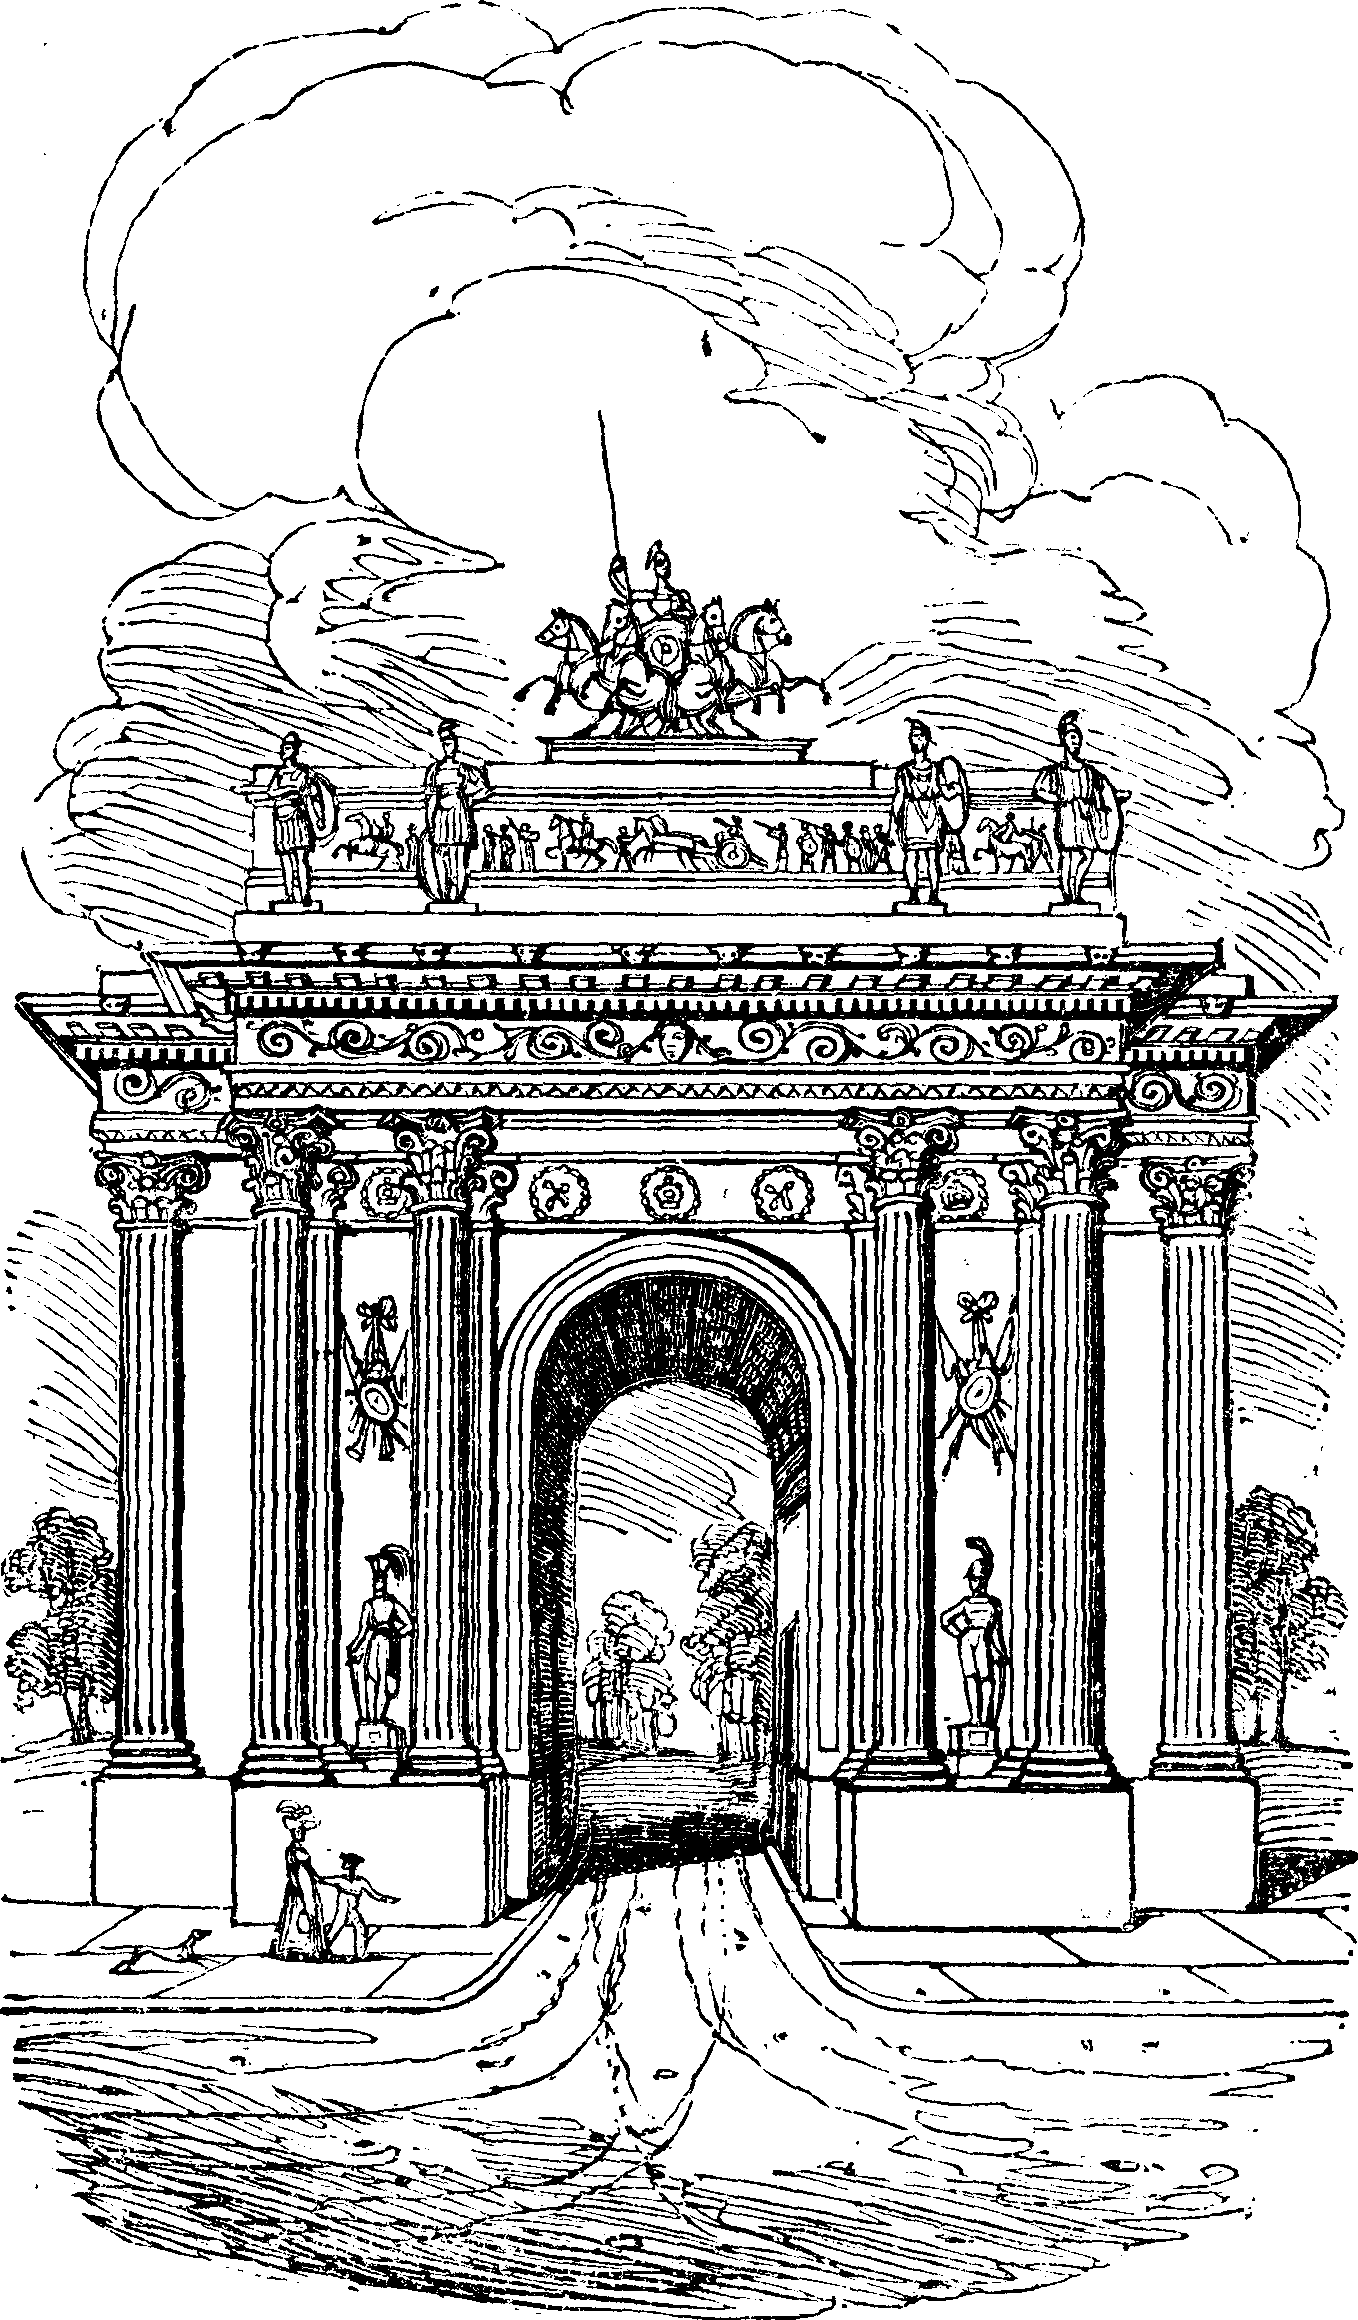 Triumphal Arch at Hyde Park.